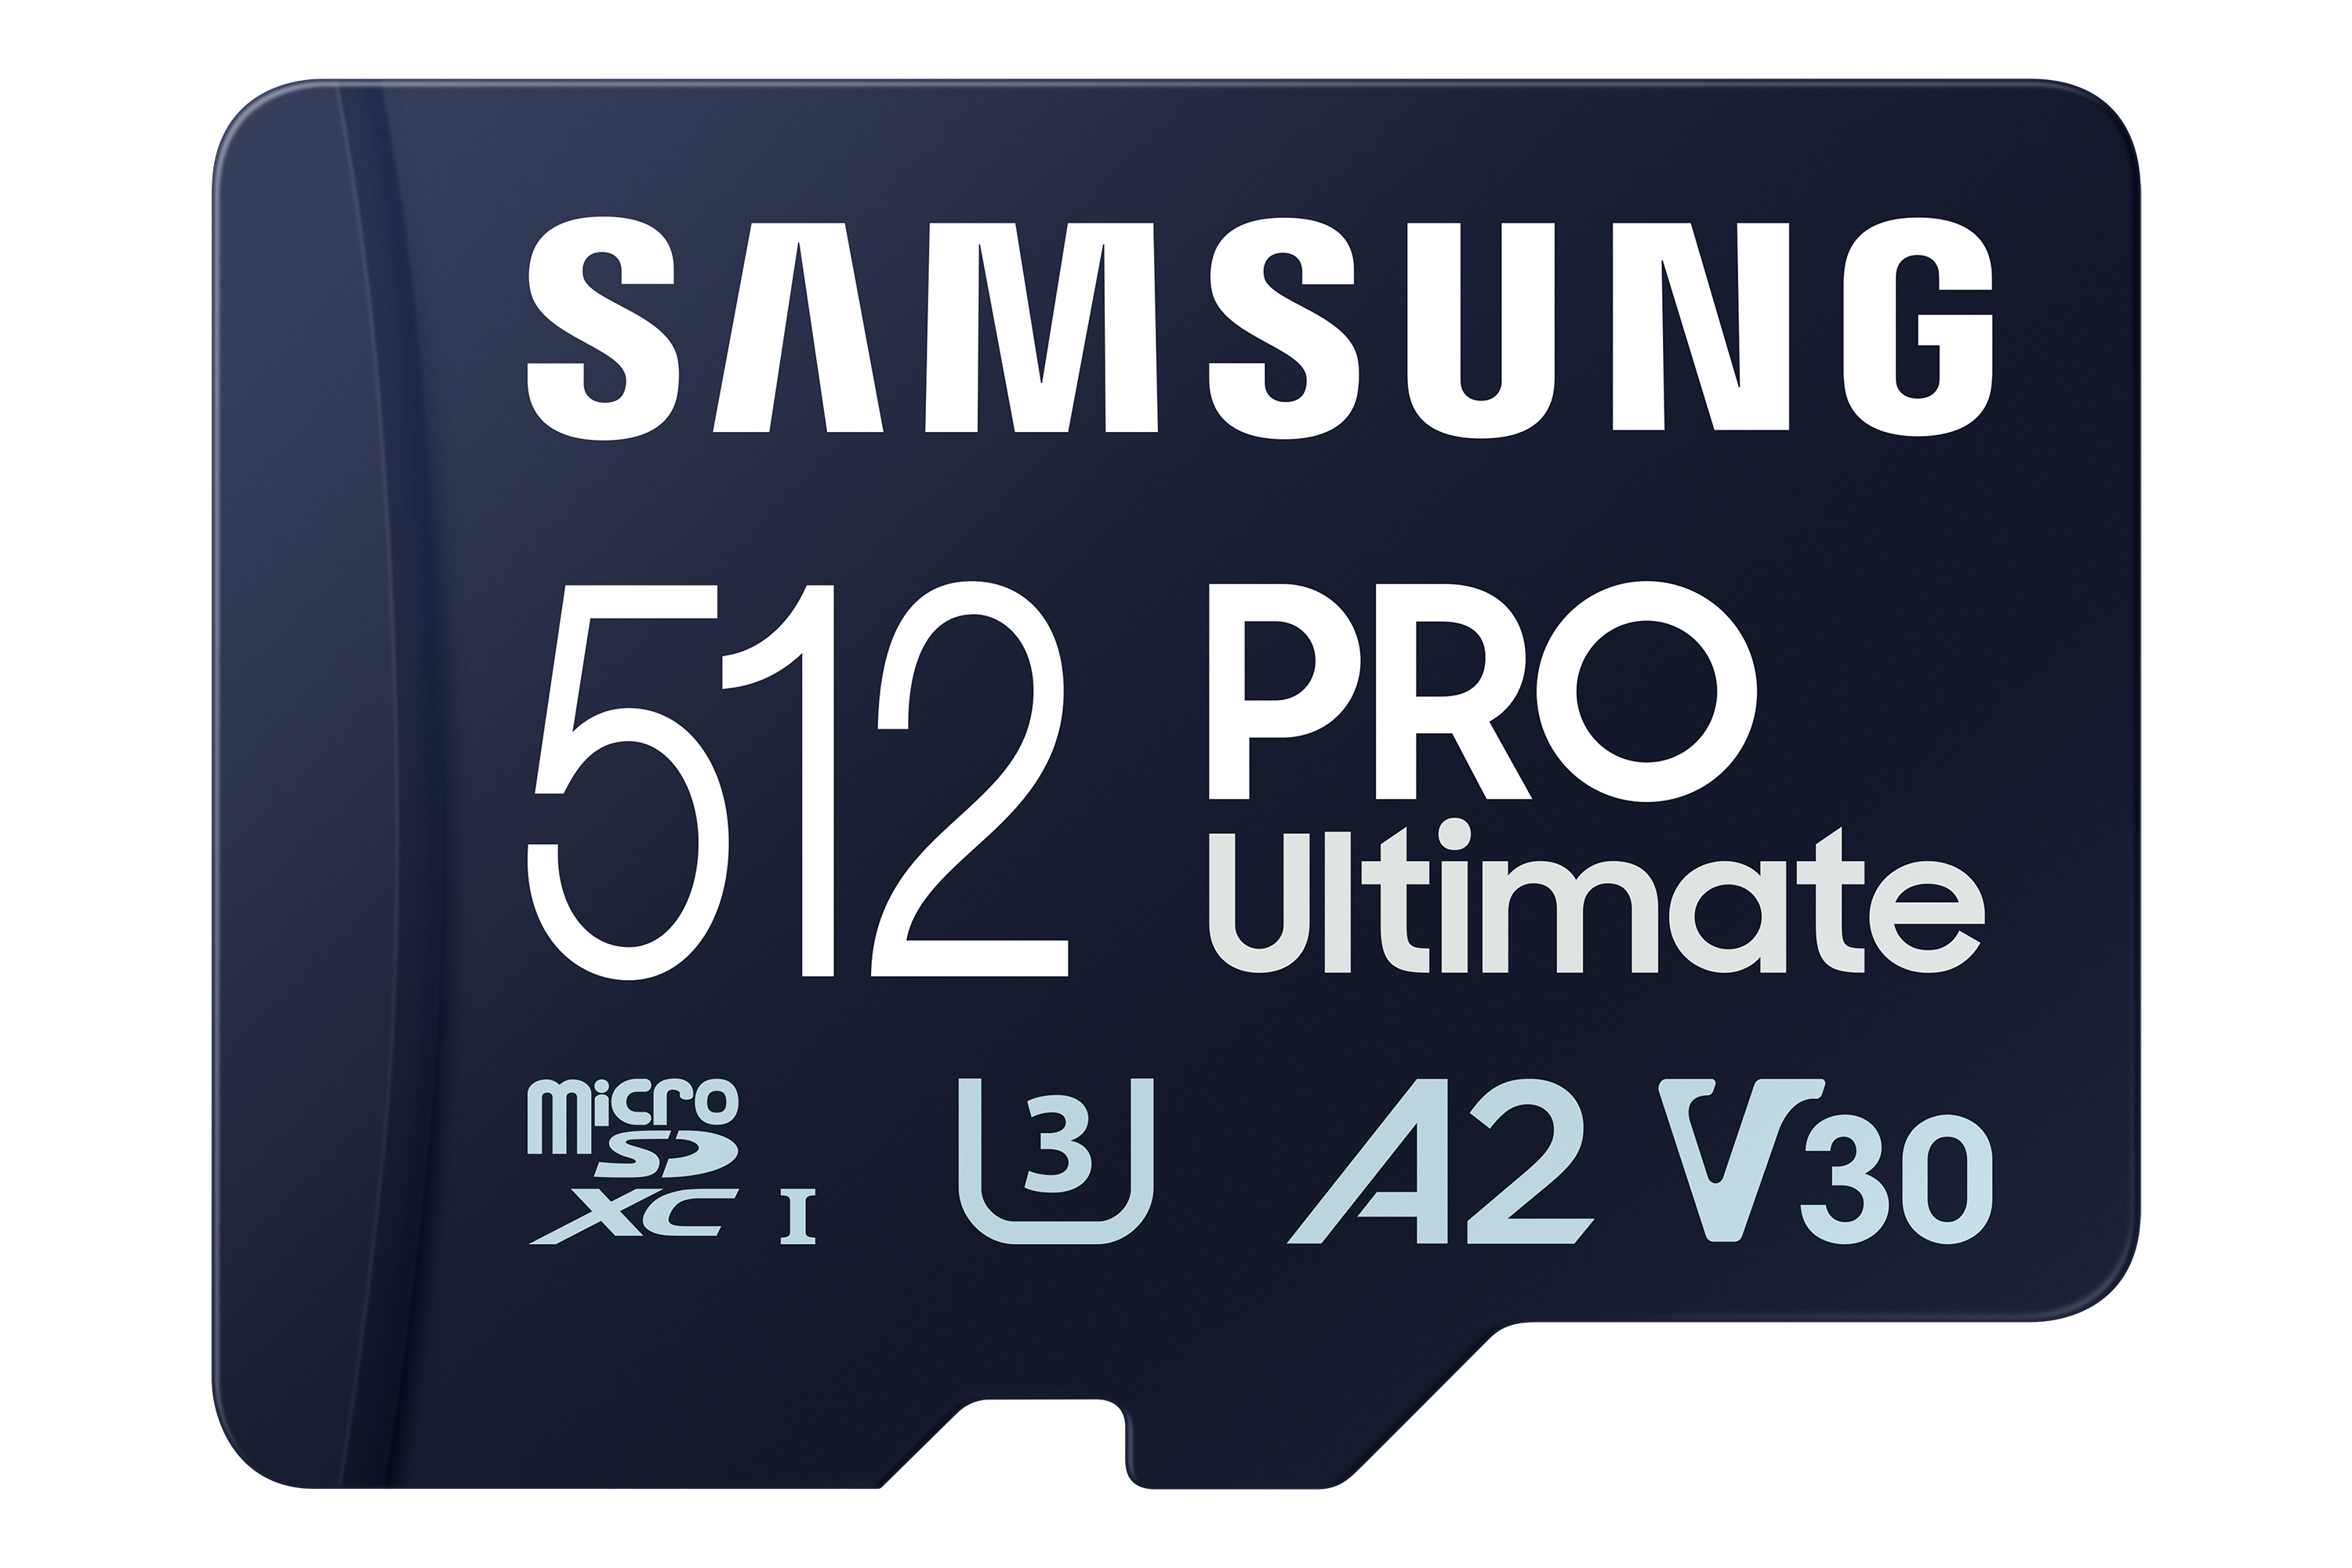 SAMSUNG PRO Ultimate, Micro-SD Speicherkarte, 512 MB/s GB, 200